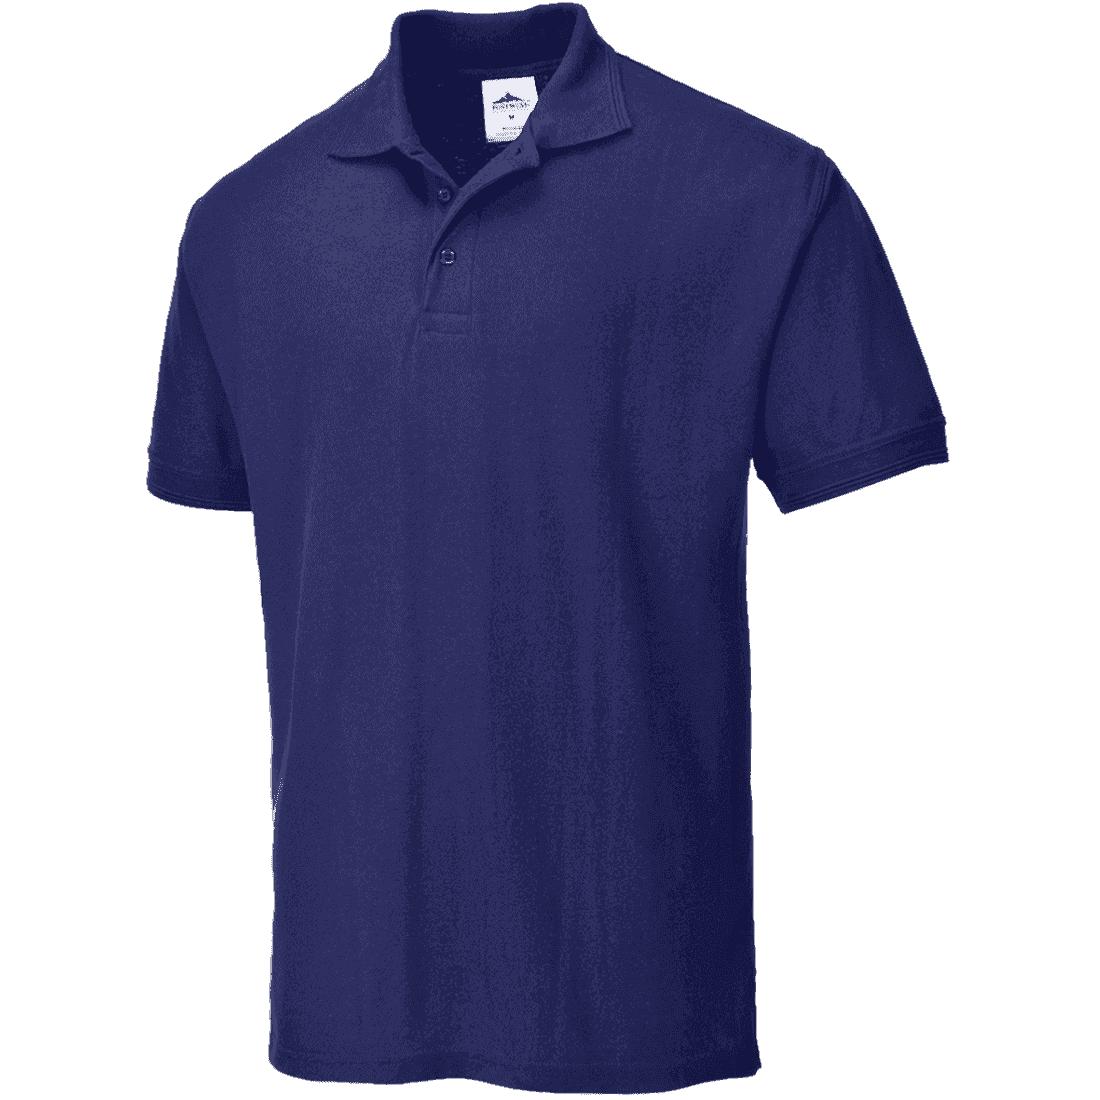 Naples Polo Shirt B210 Portwest Navy